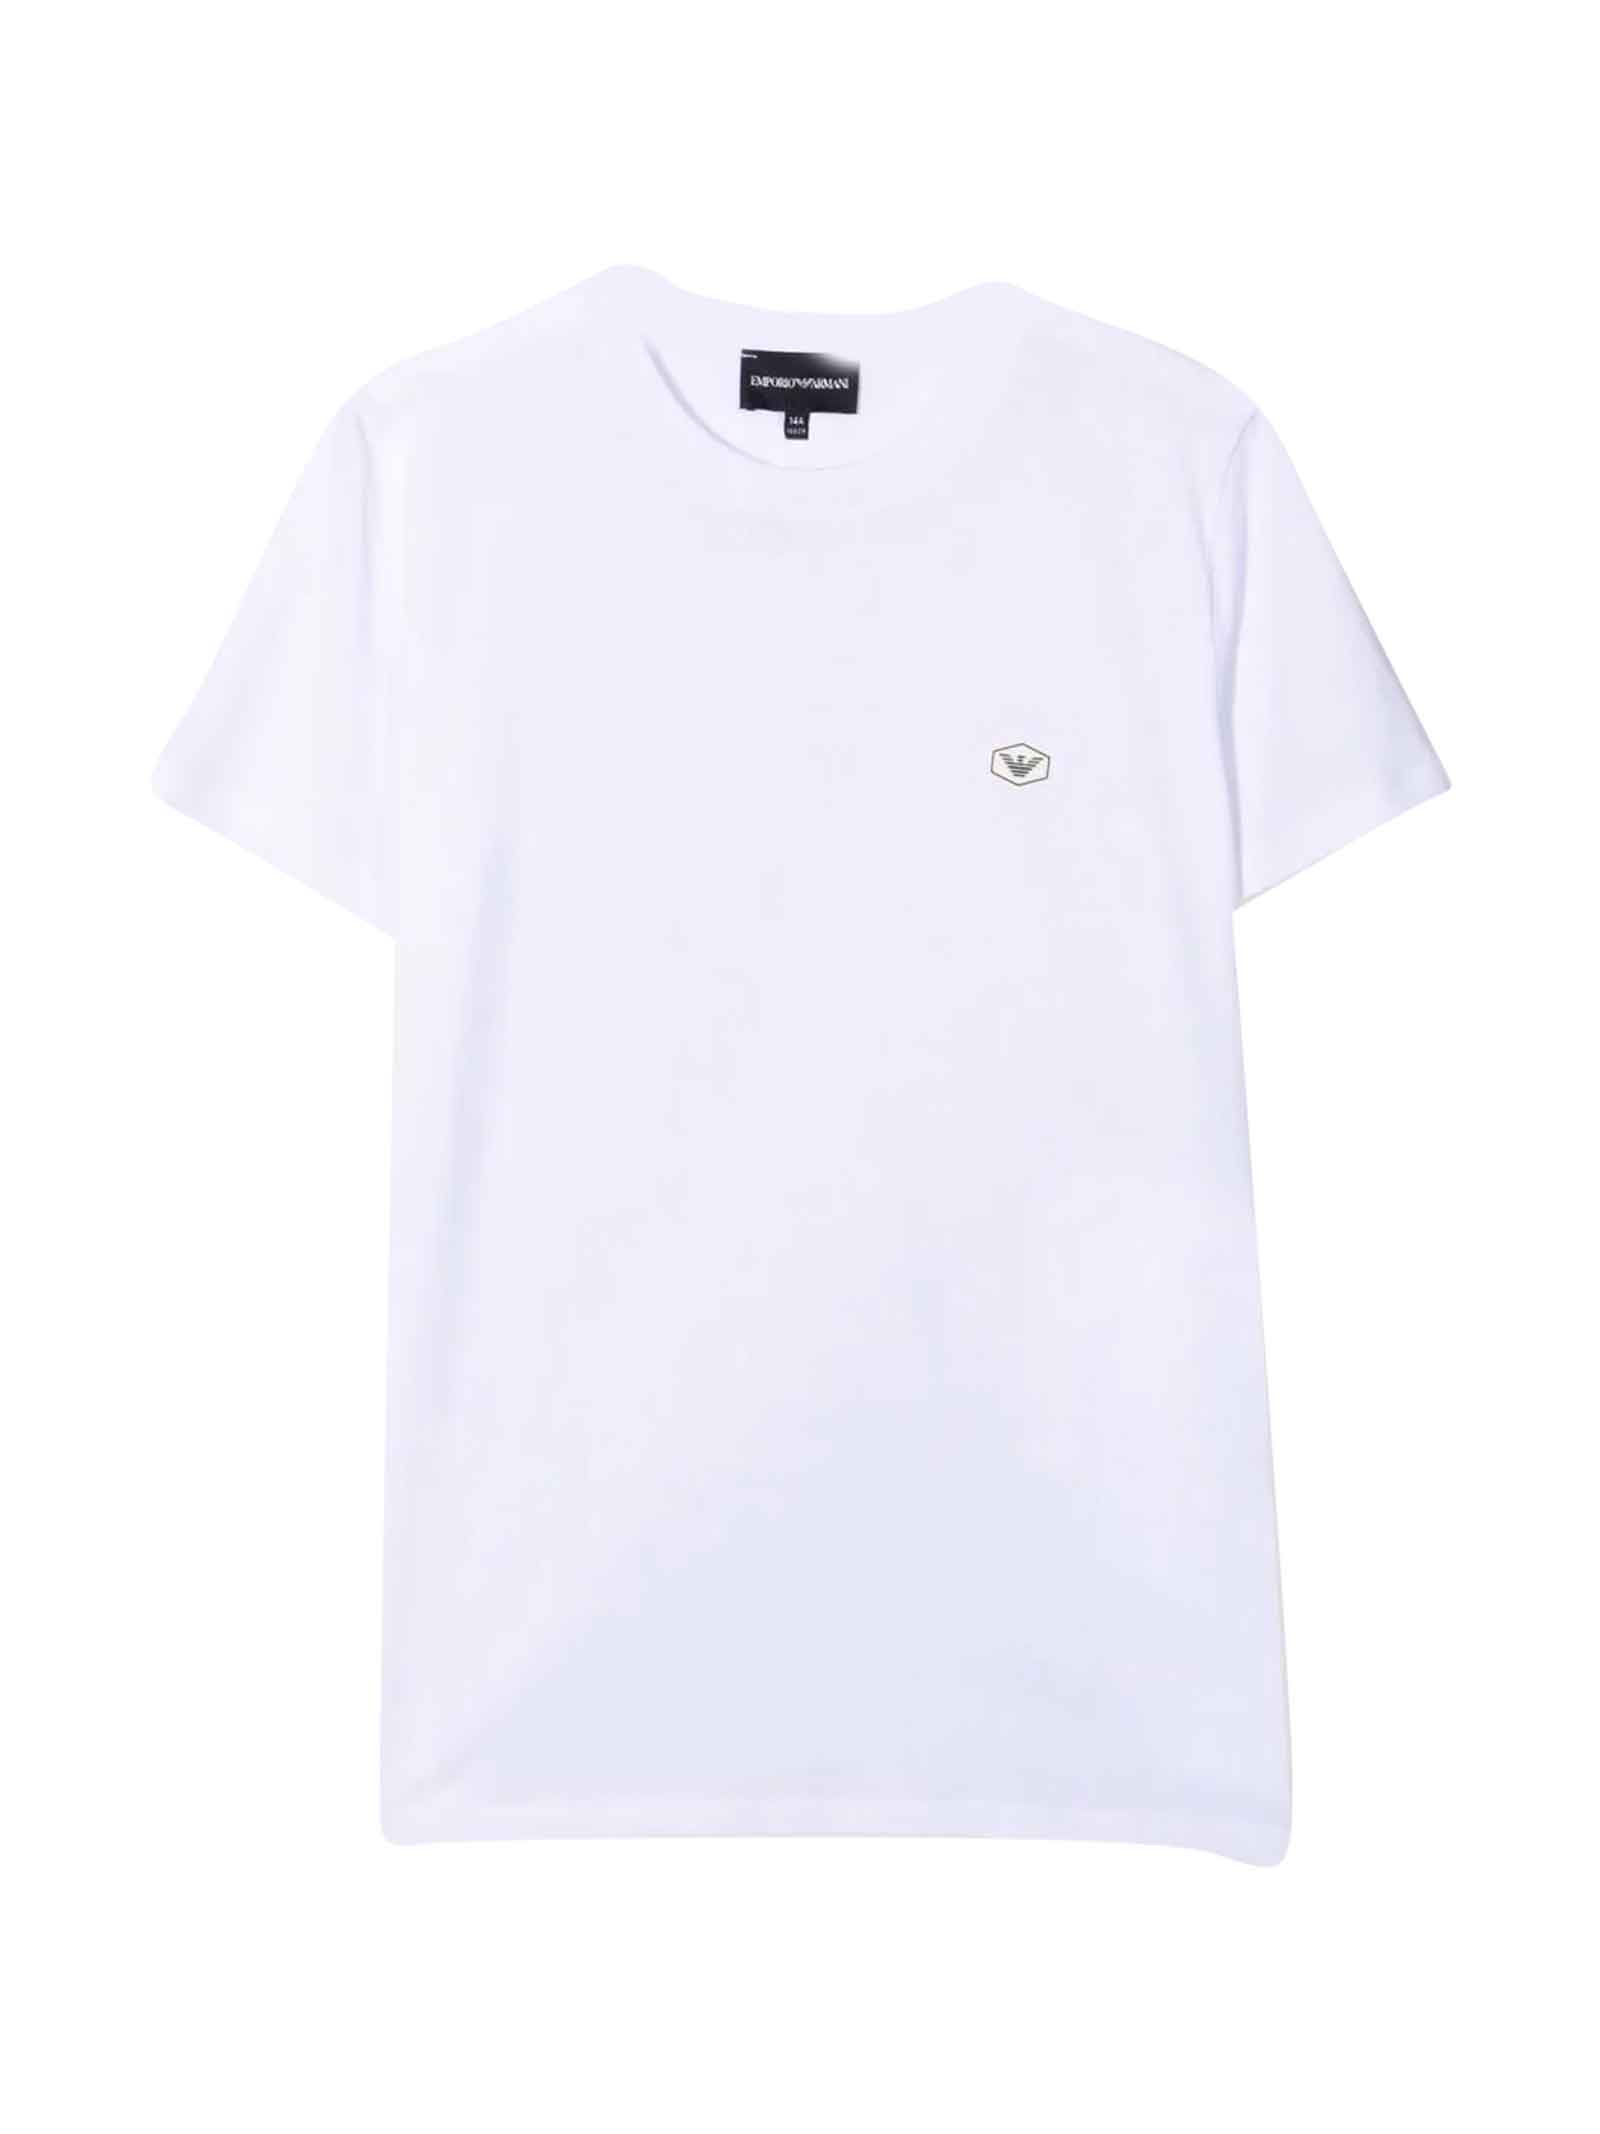 Emporio Armani White T-shirt Teen Boy